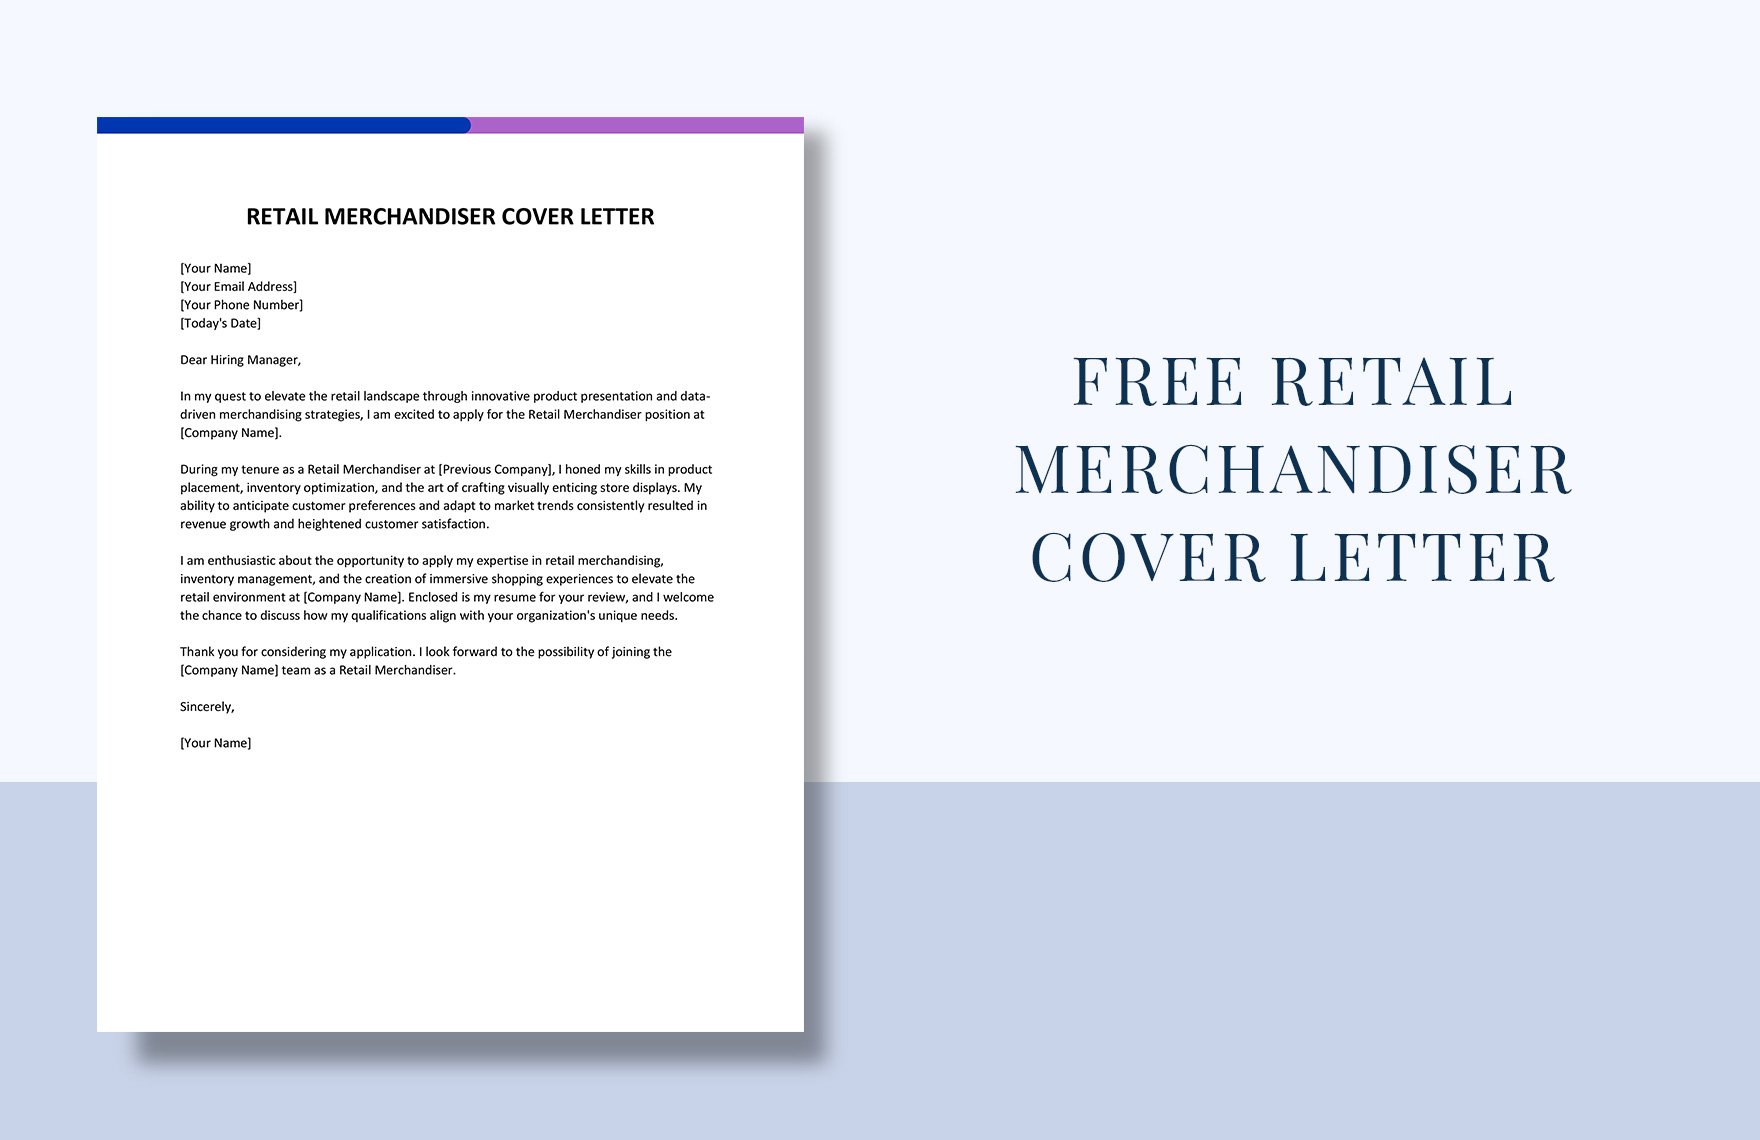 Retail Merchandiser Cover Letter in Google Docs, Word - Download ...